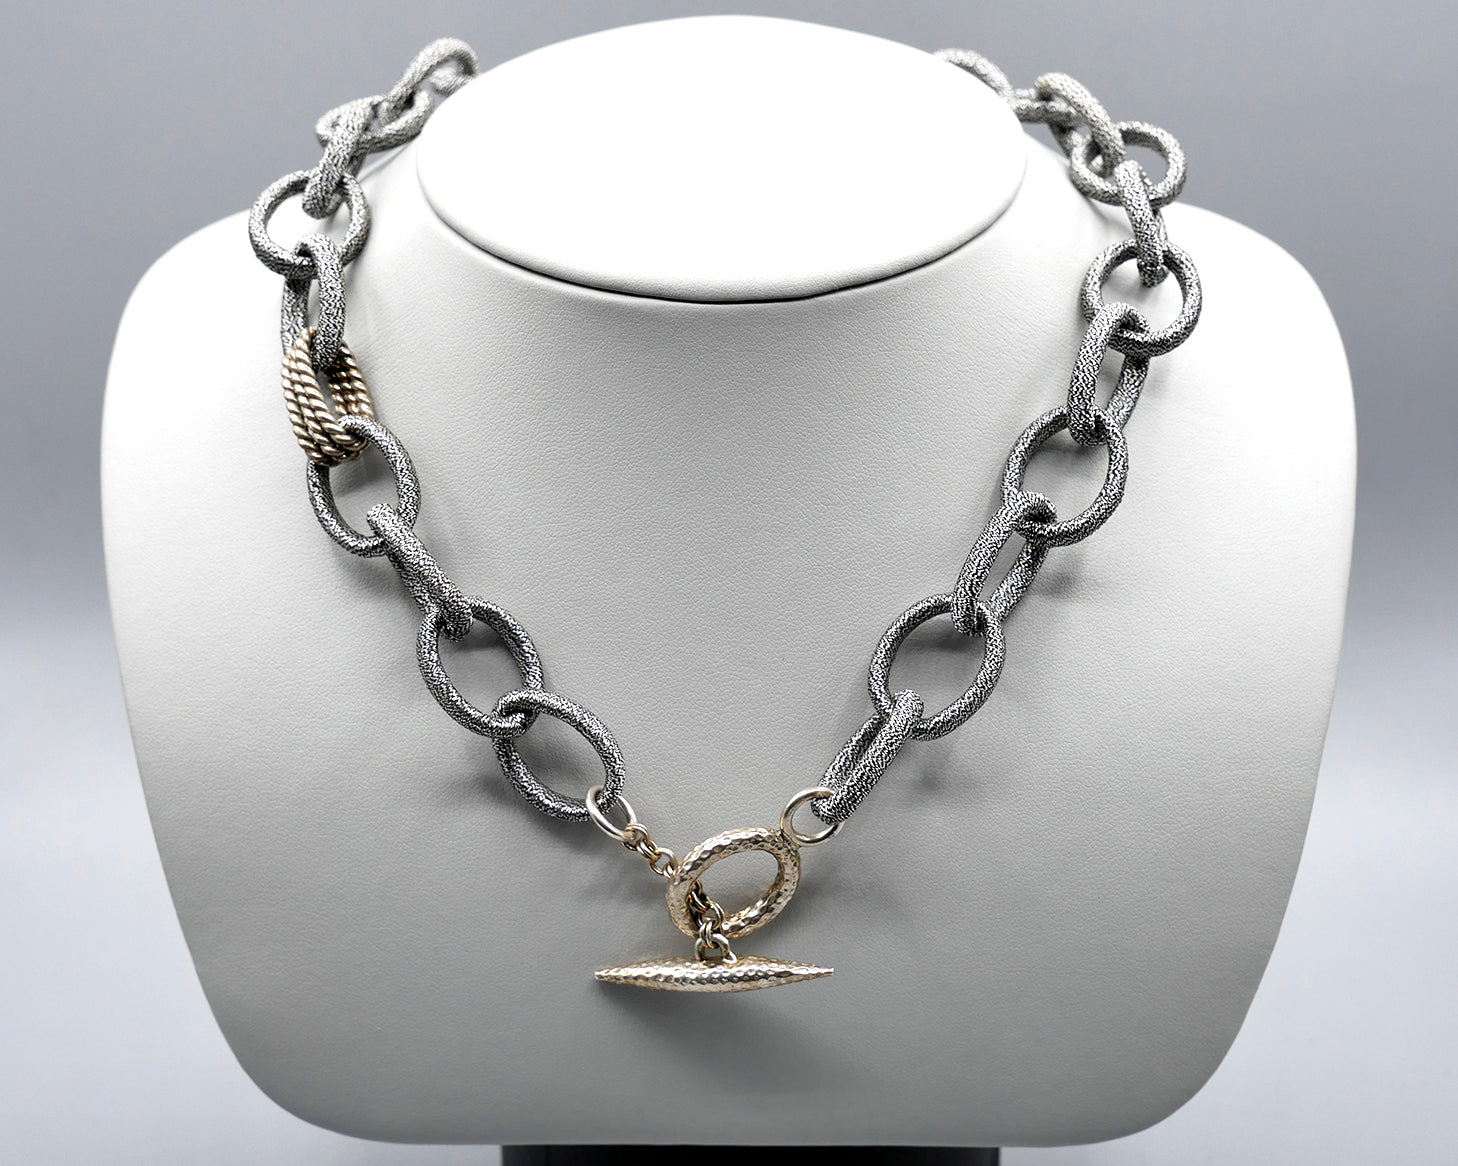 Silk Link Necklace- Metallic Gunmetal large link toggle necklace